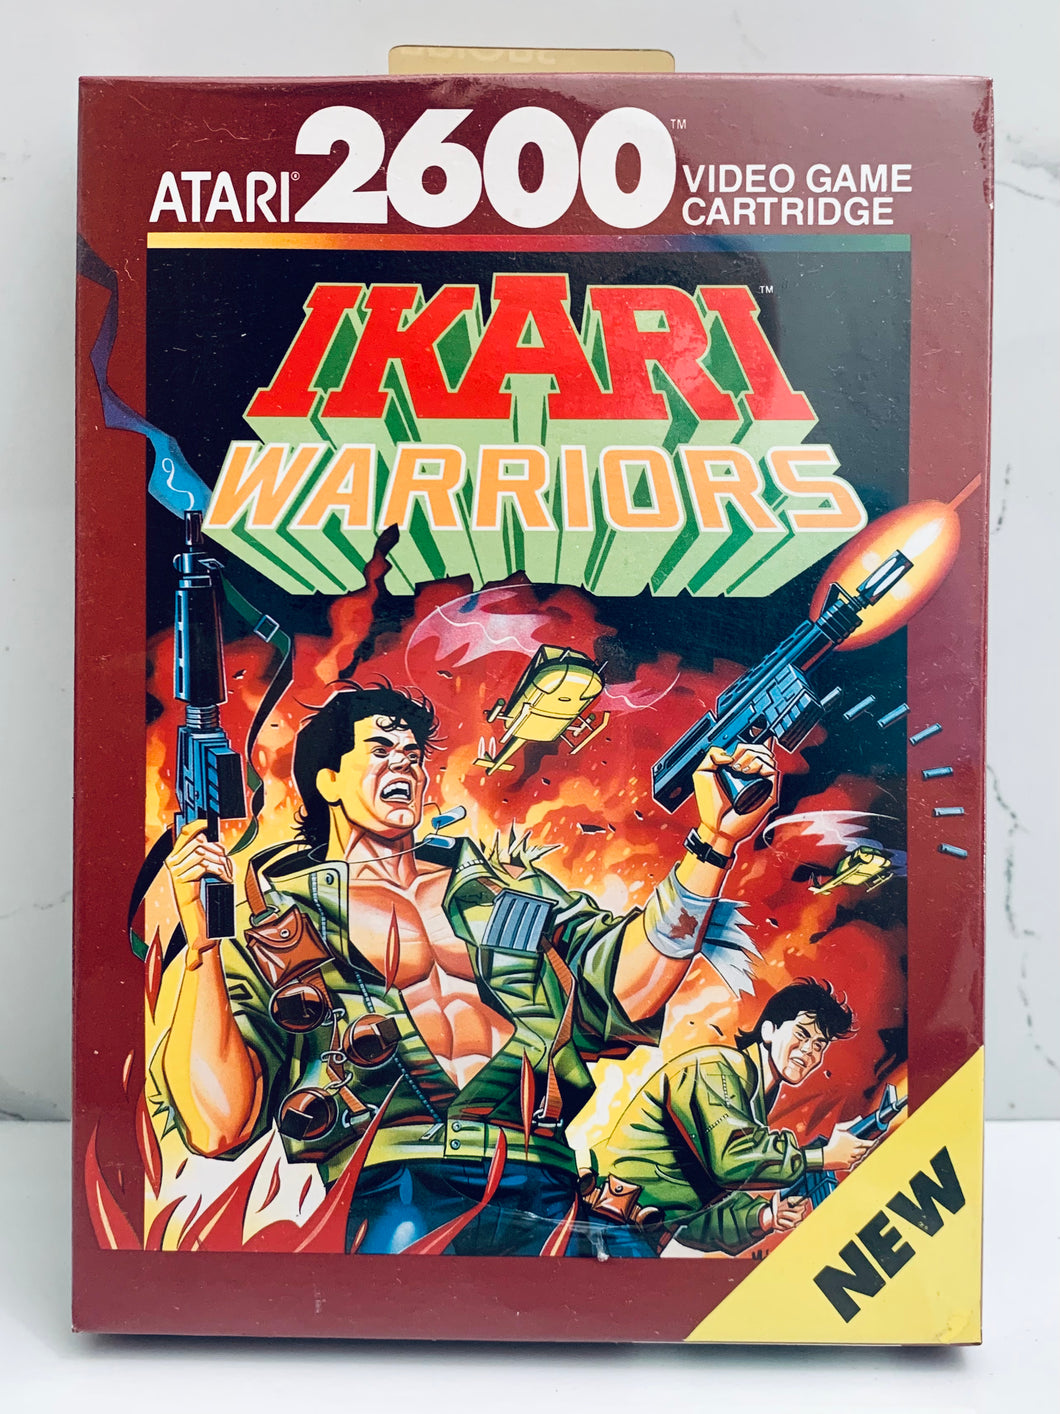 Ikari Warriors - Atari VCS 2600 - NTSC - Brand New